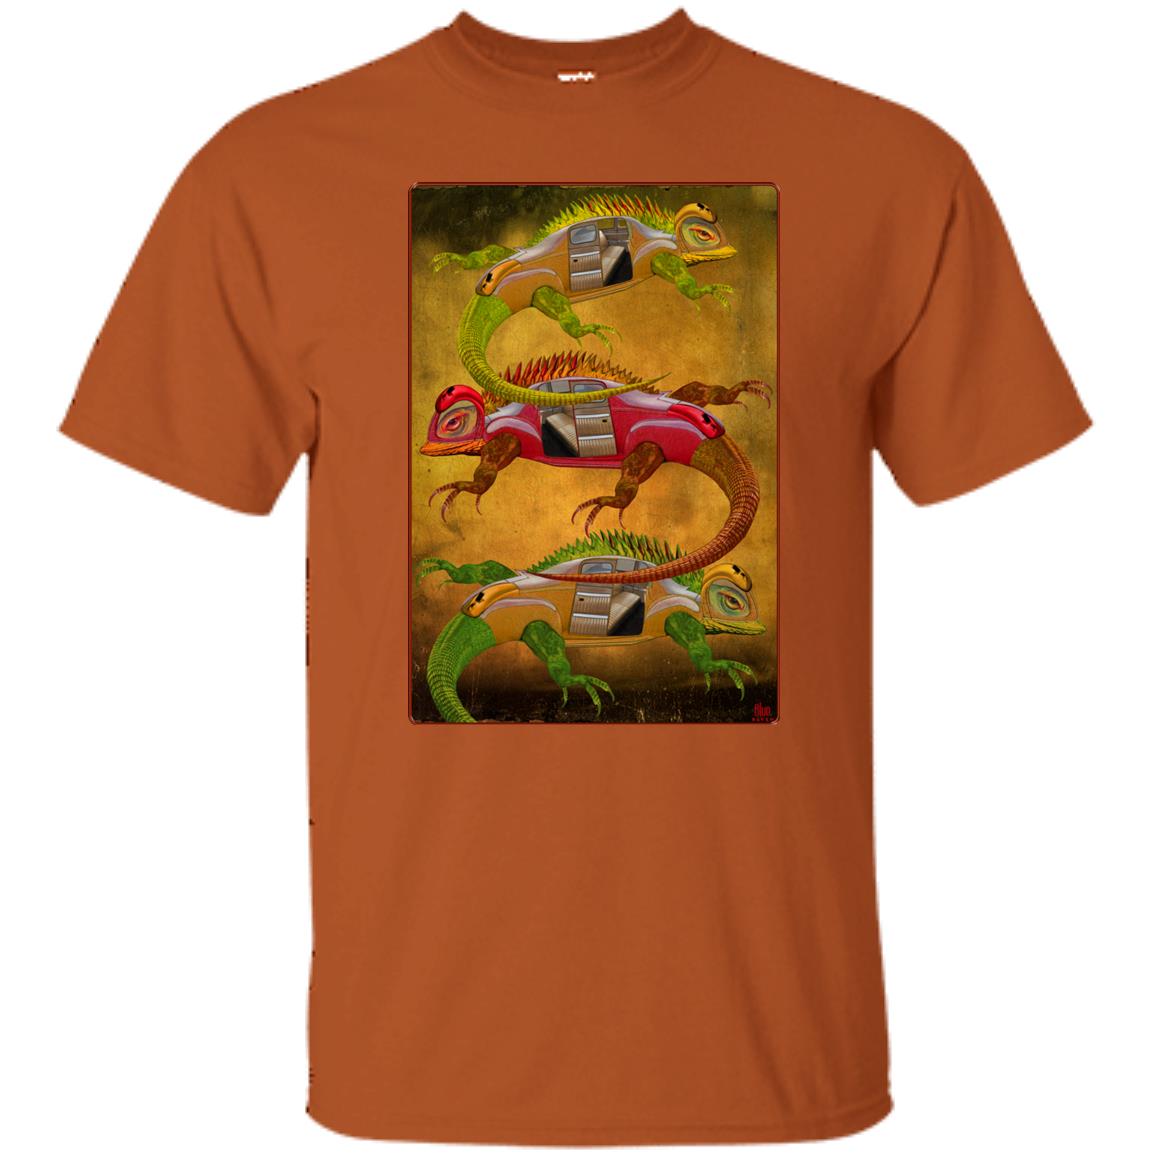 Uber Lizards - Men's Classic Fit T-Shirt